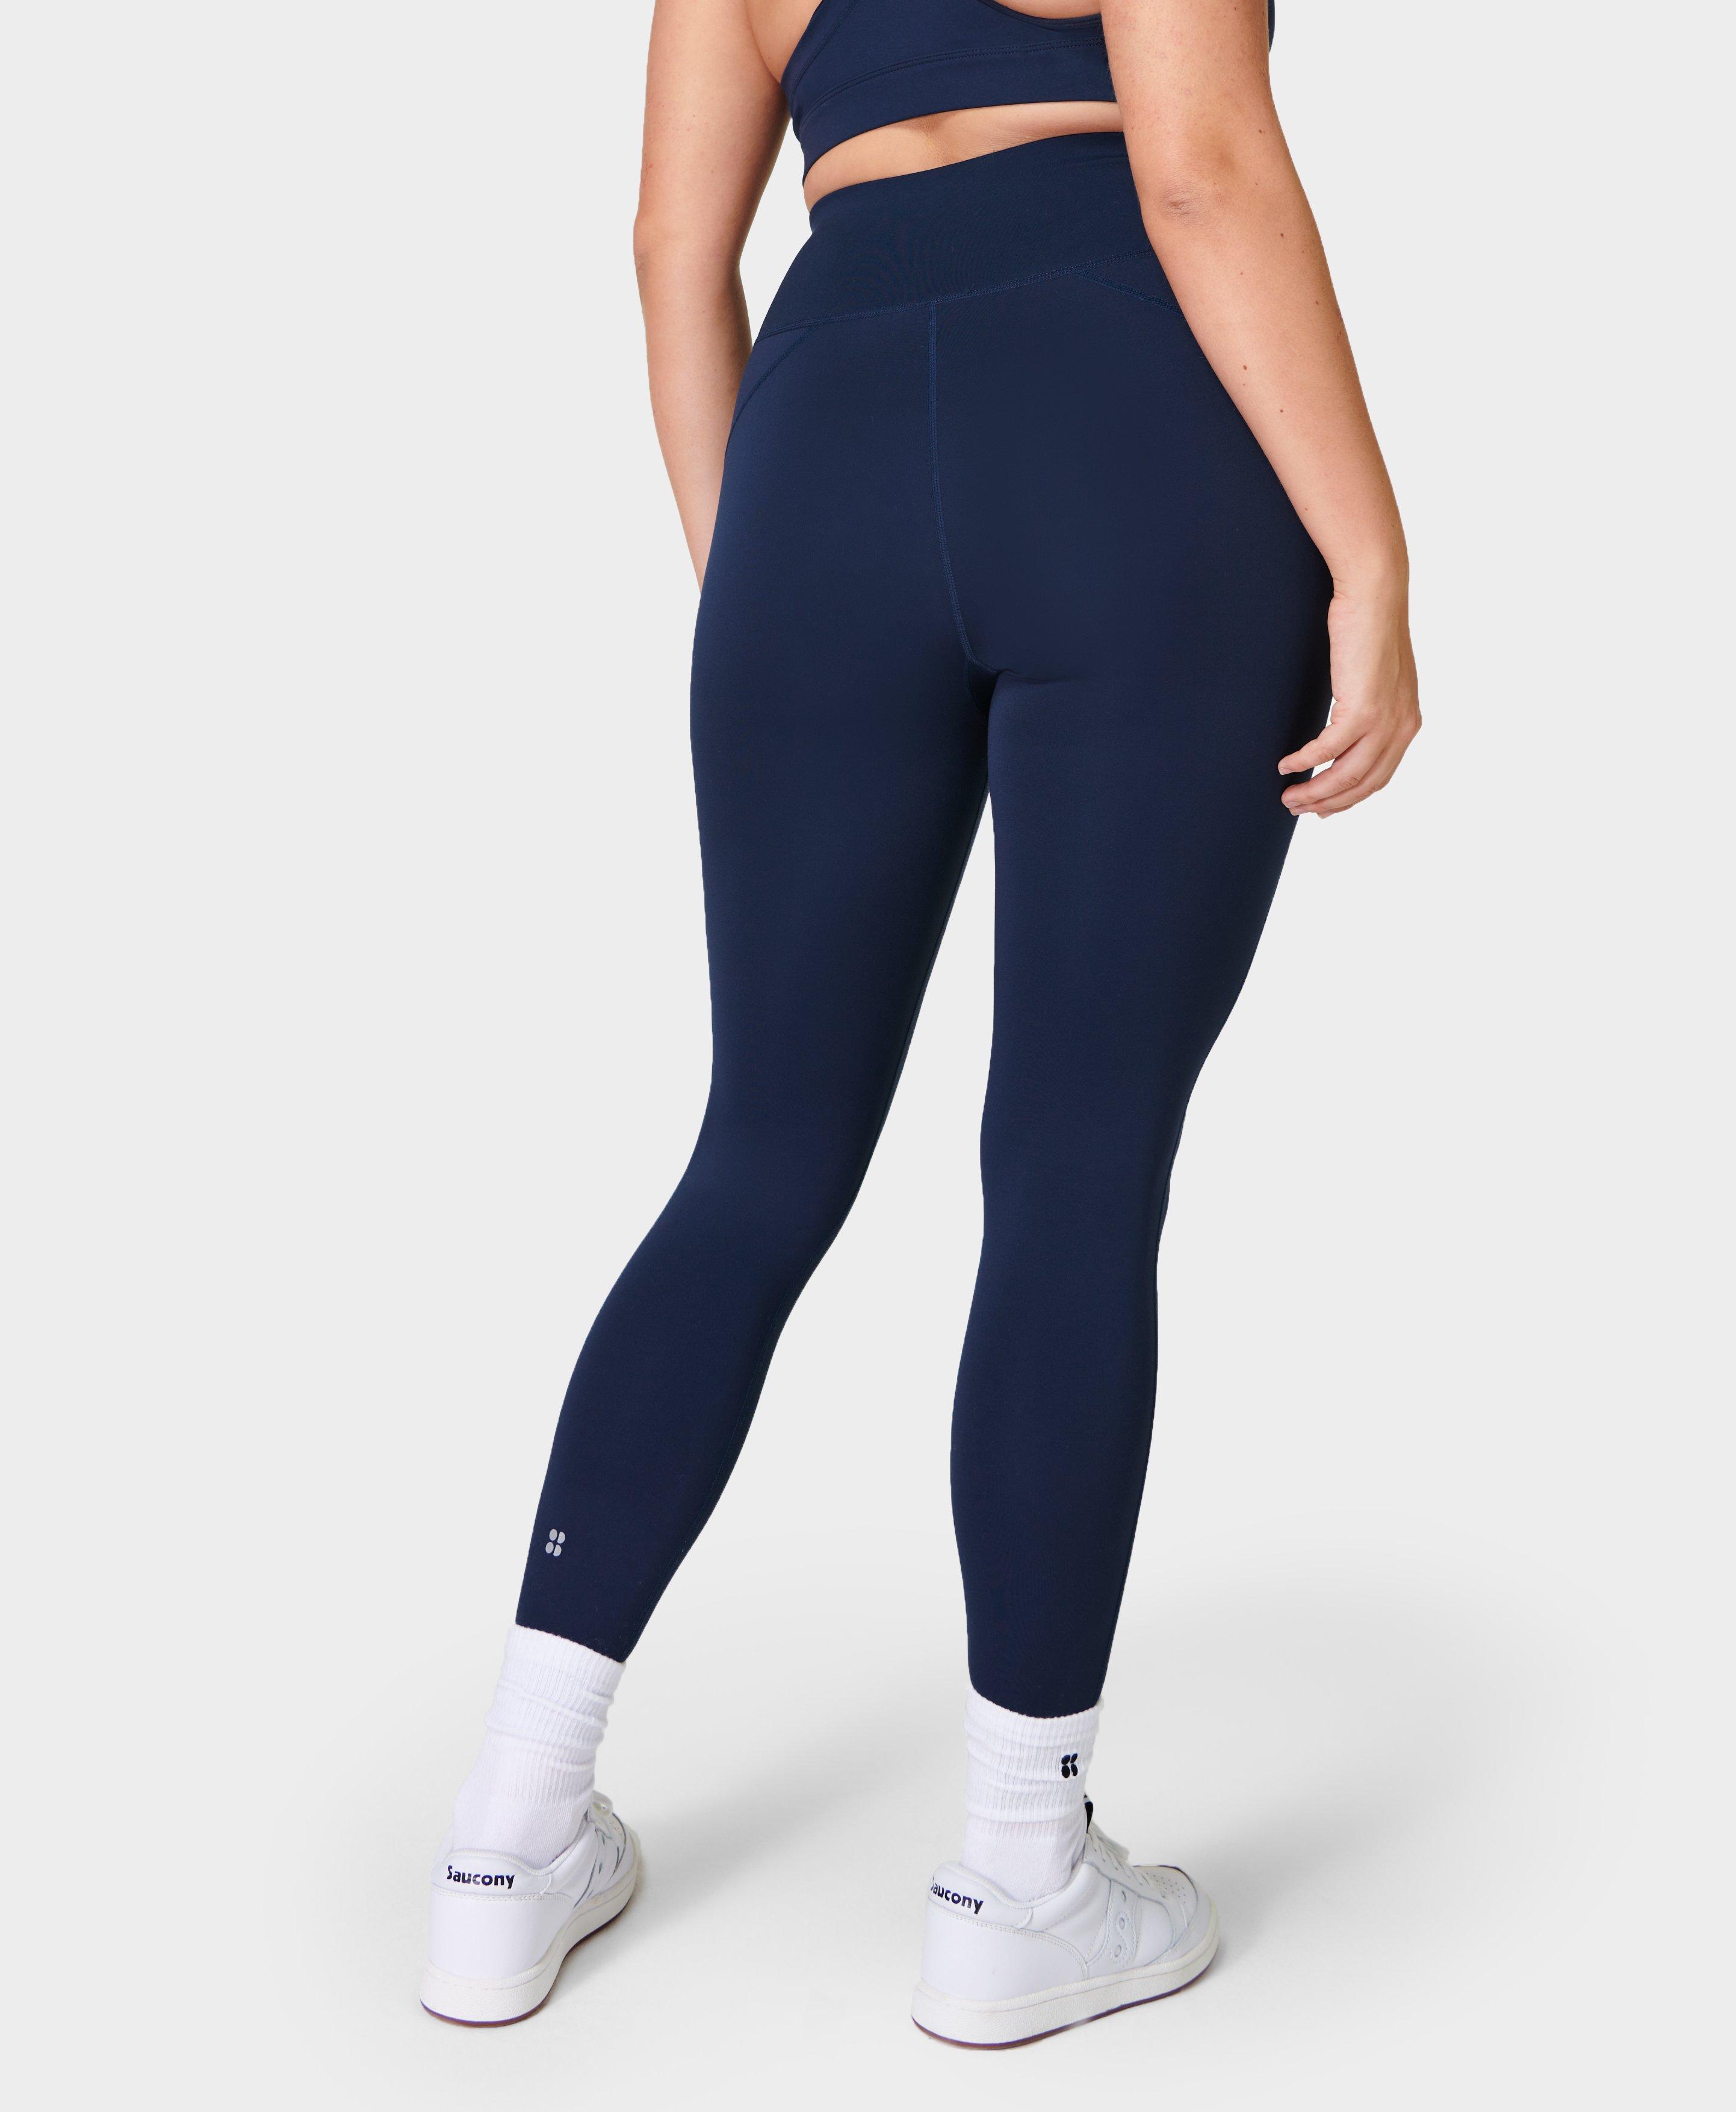 Womens Plus Size Stretch Leggings Full-Length Ultra Soft Tights Pants(Navy  Blue,XL)